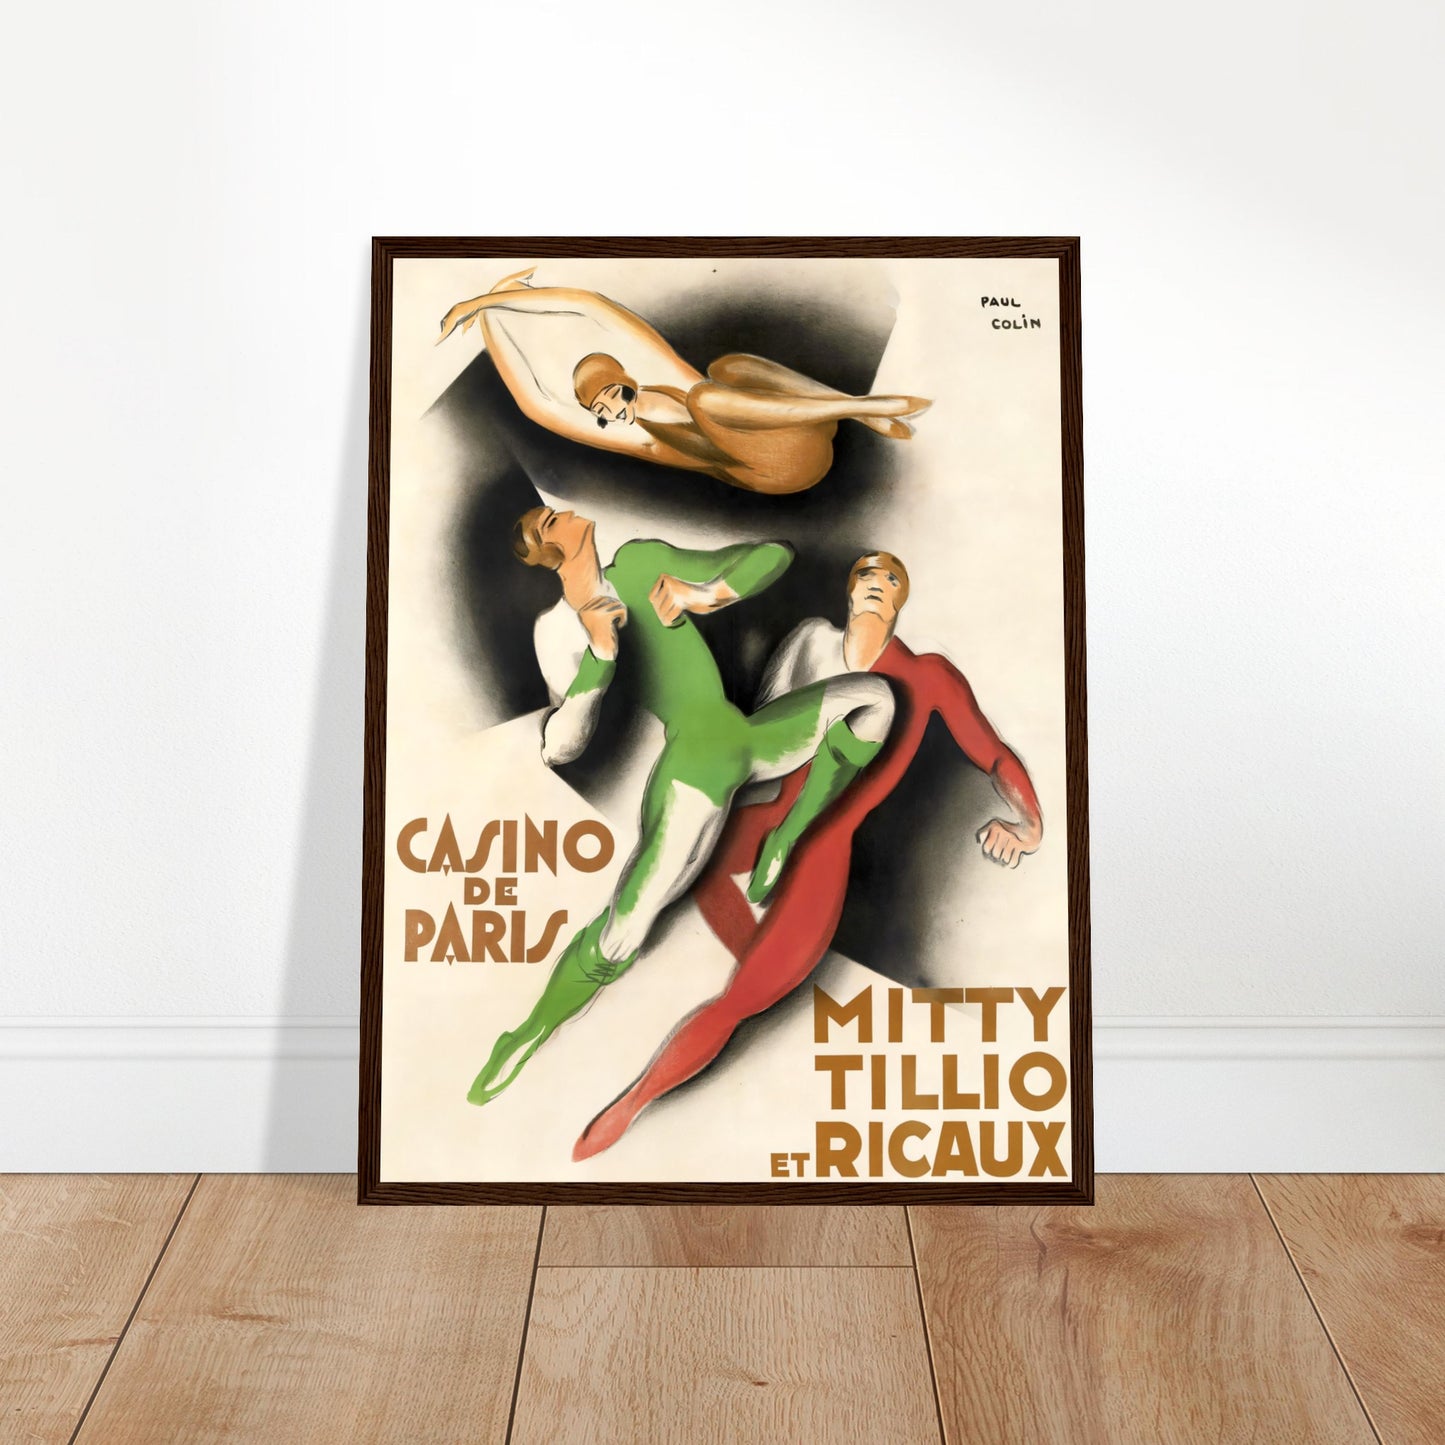 Vintage Poster Reprint on Premium Matte paper - Posterify